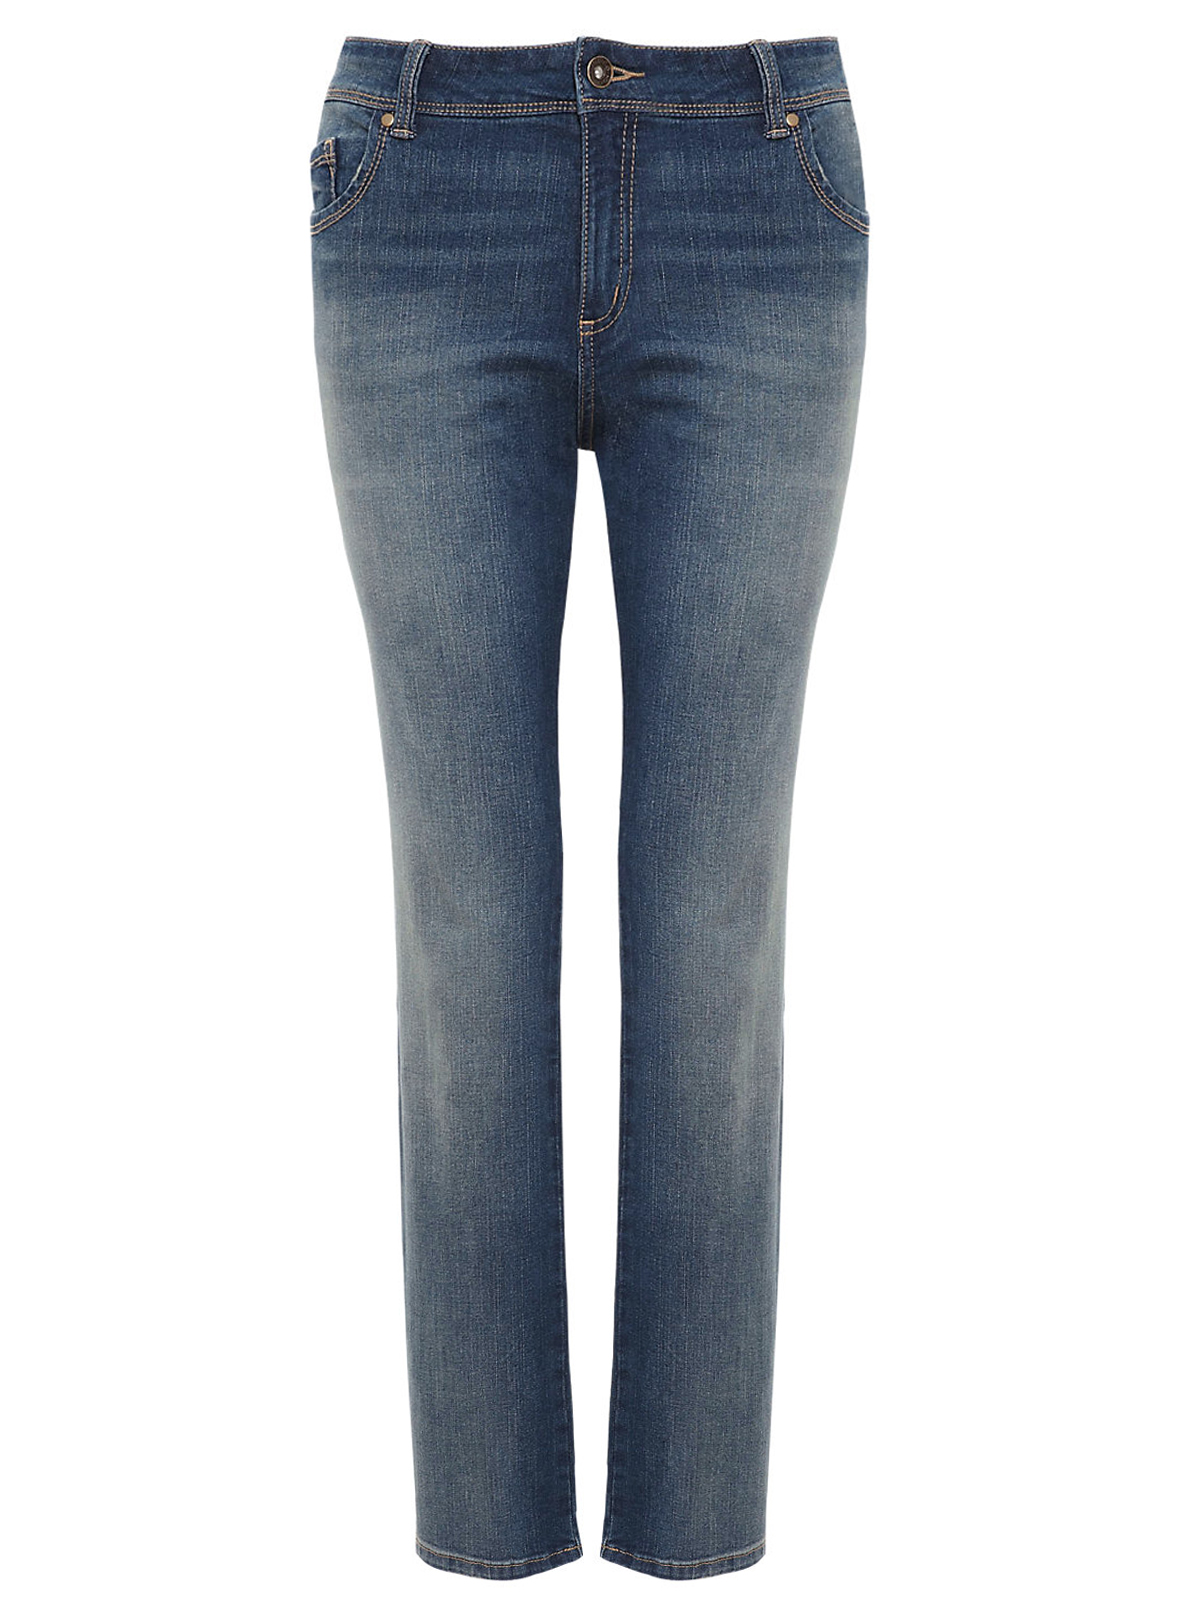 Marks and Spencer - - M&5 INDIGO Straight Leg Denim Jeans - Size 10 to 18